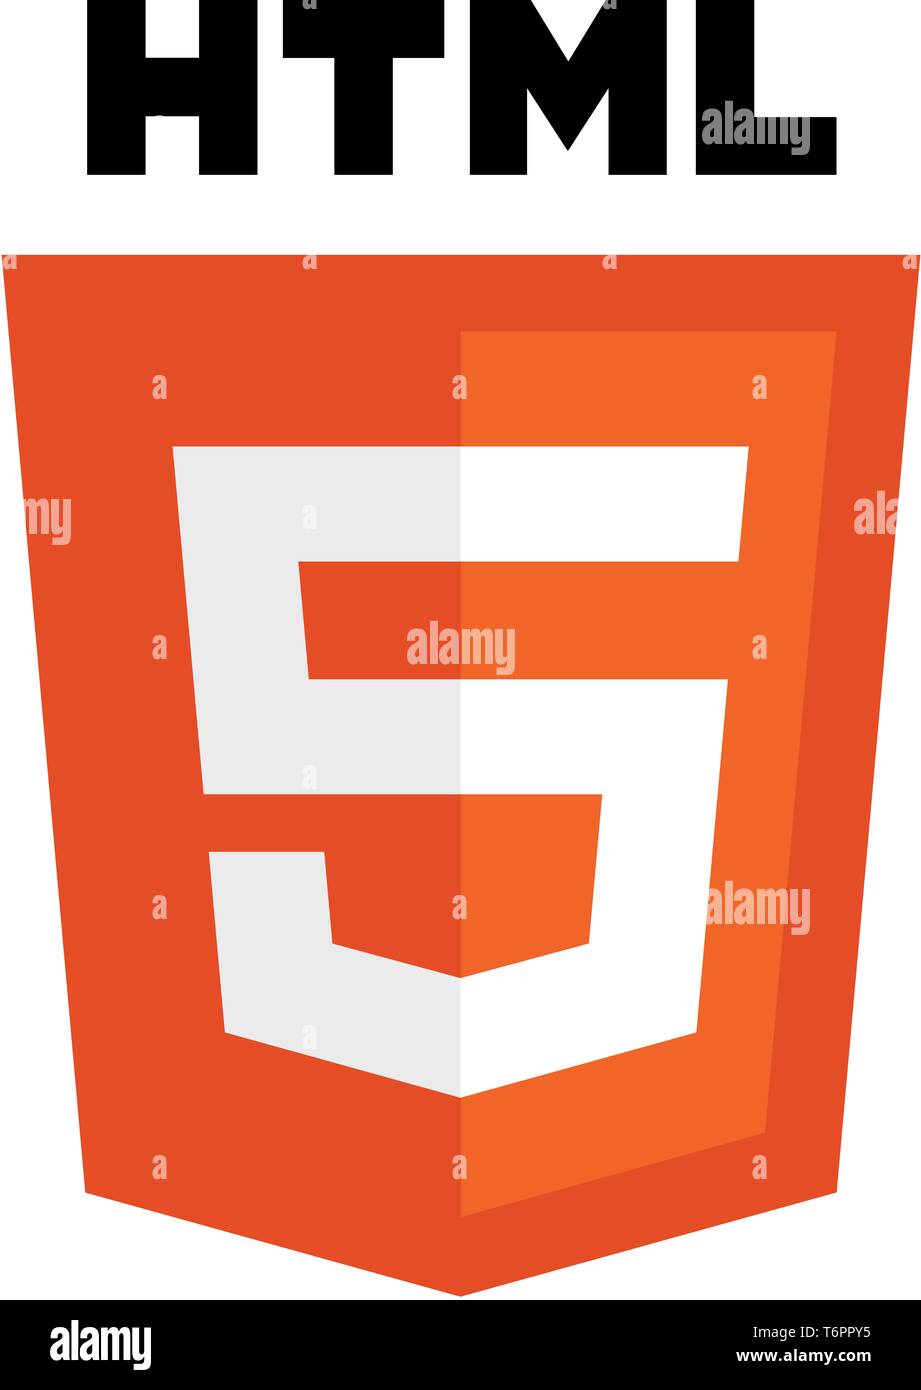 HTML 5, HTML5 logo, corporate identity, lettering, optional, white background, Germany Stock Photo